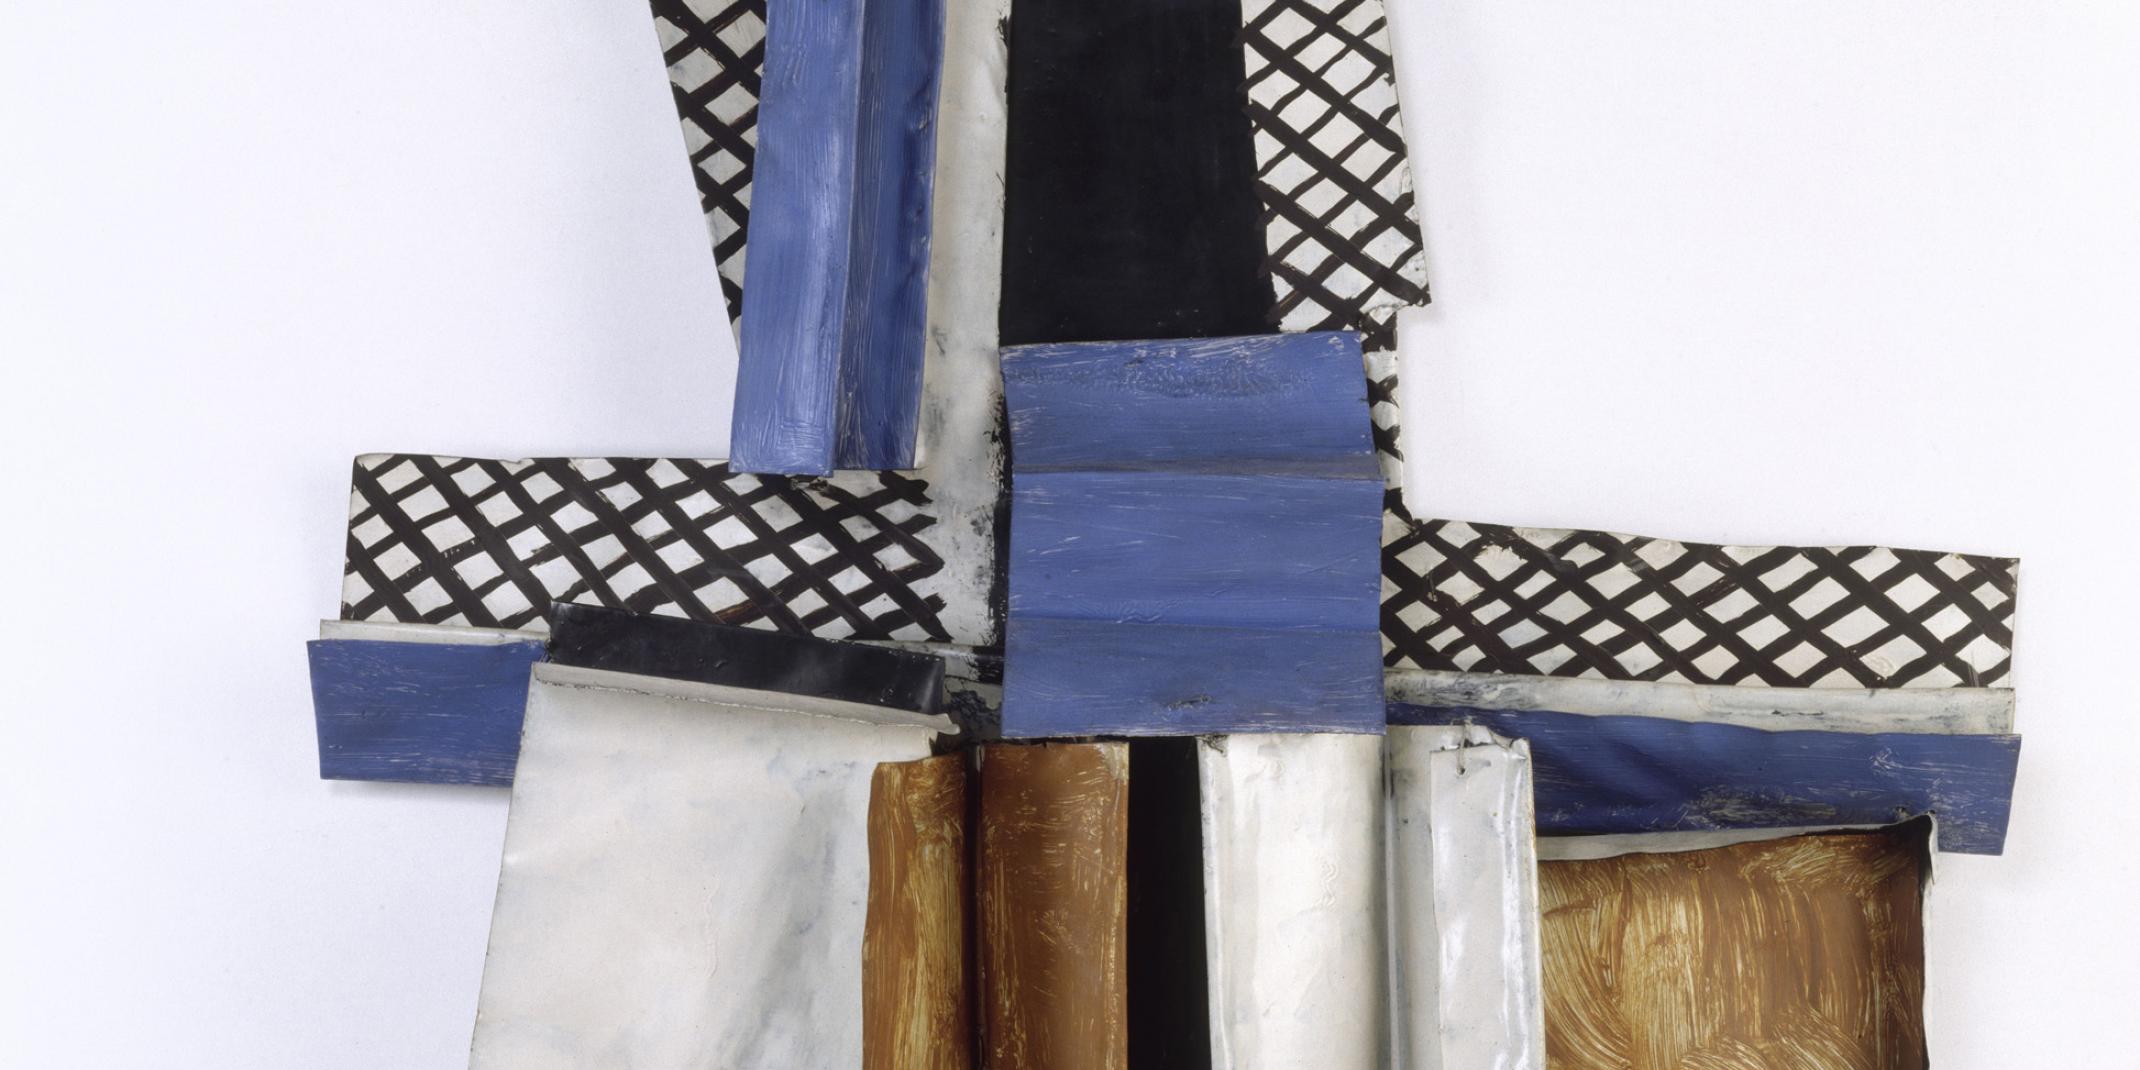 Pablo Picasso: Violon, 1915, geschnittenes, gefaltetes und bemaltes Blech, Eisendraht, 100 x 63,7 x 18 cm, Musée national Picasso, Paris